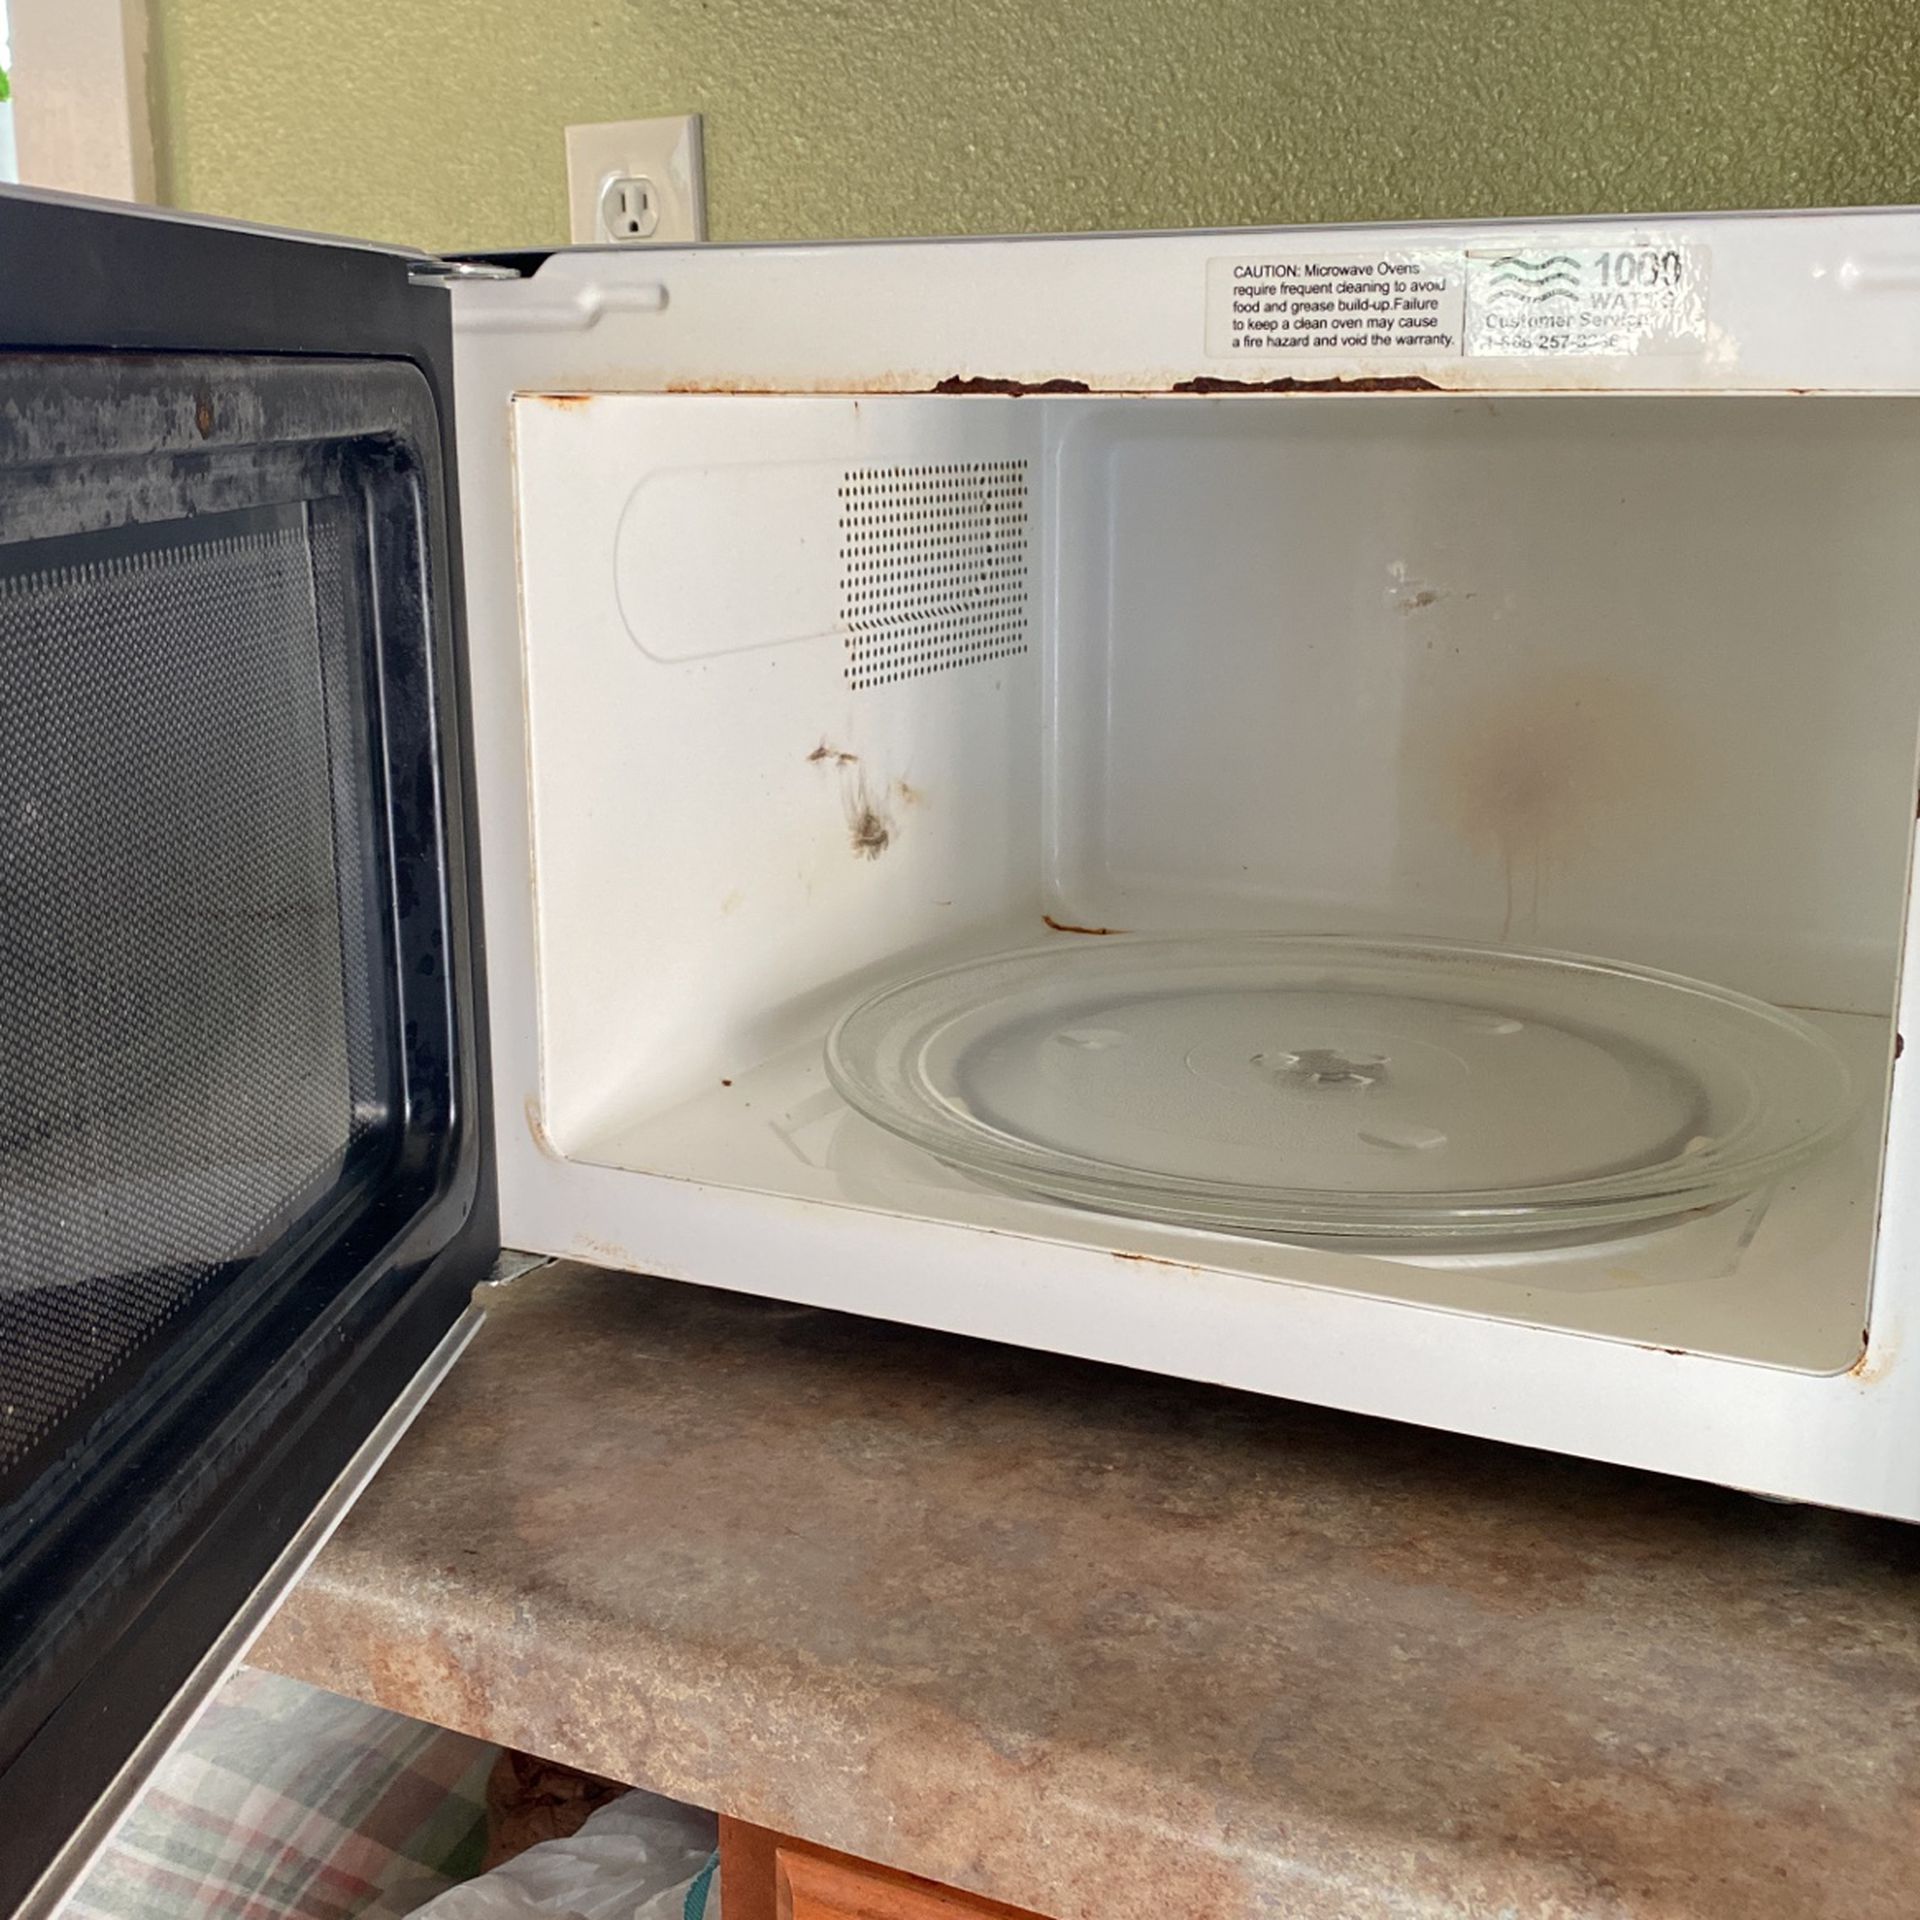 0.5 Cu. Ft. Countertop Microwave for Sale in Auburn, WA - OfferUp